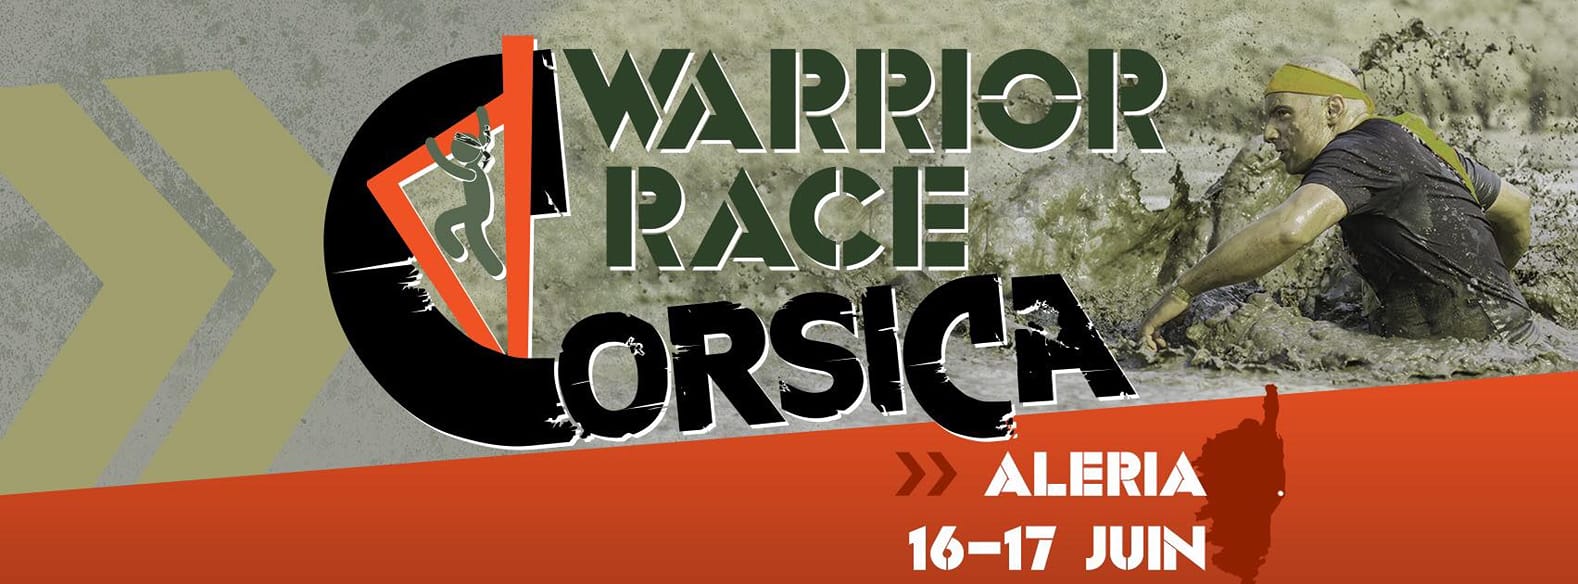 Warrior Race Corsica